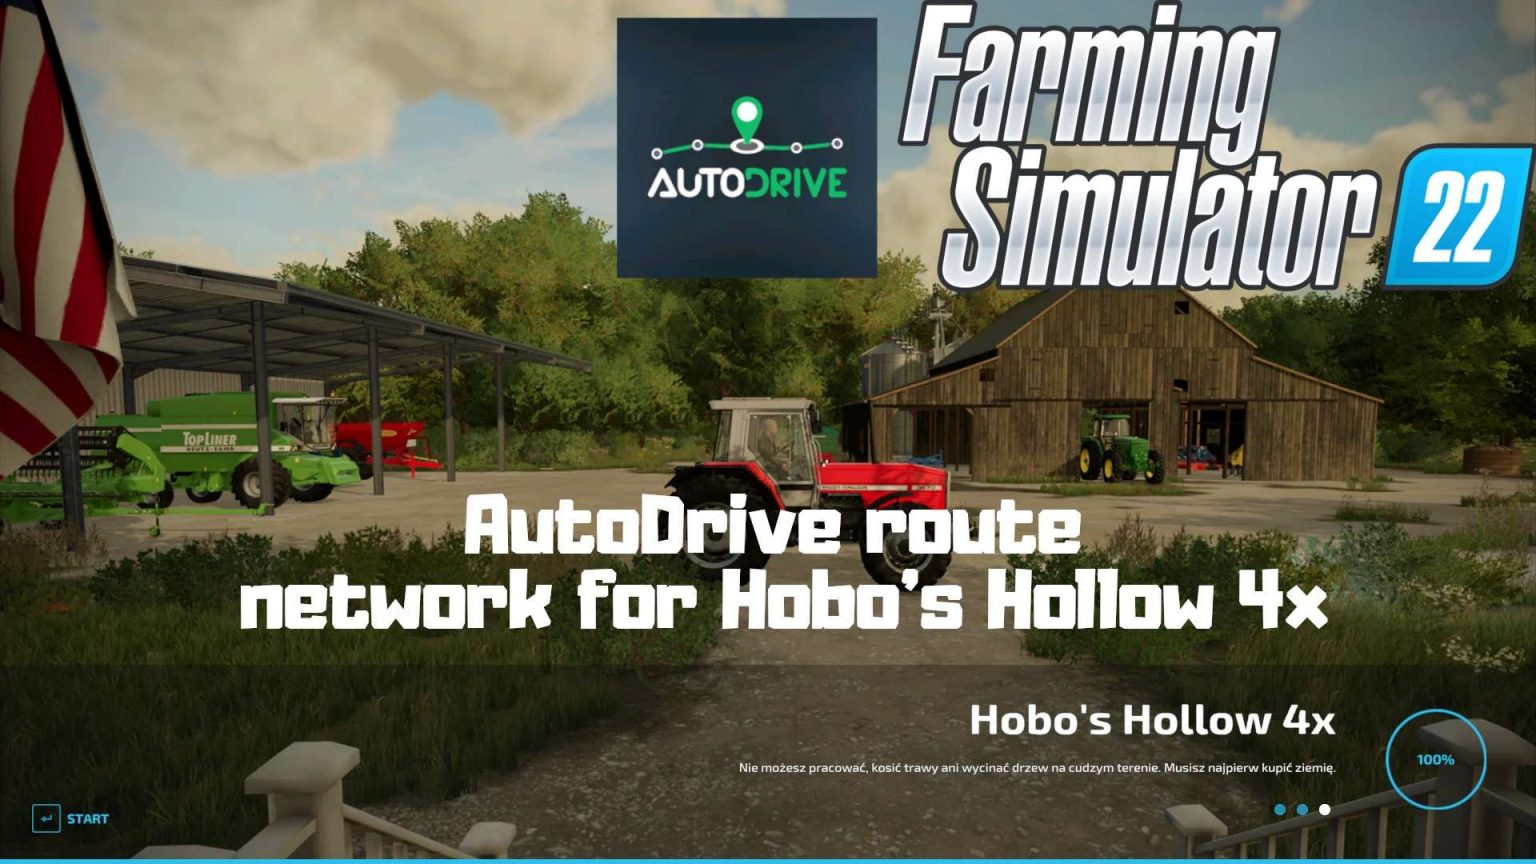 Autodrive Route Network For Hobos Hollow 4x V10 Fs22 Farming Simulator 22 Mod Fs22 Mod 6628